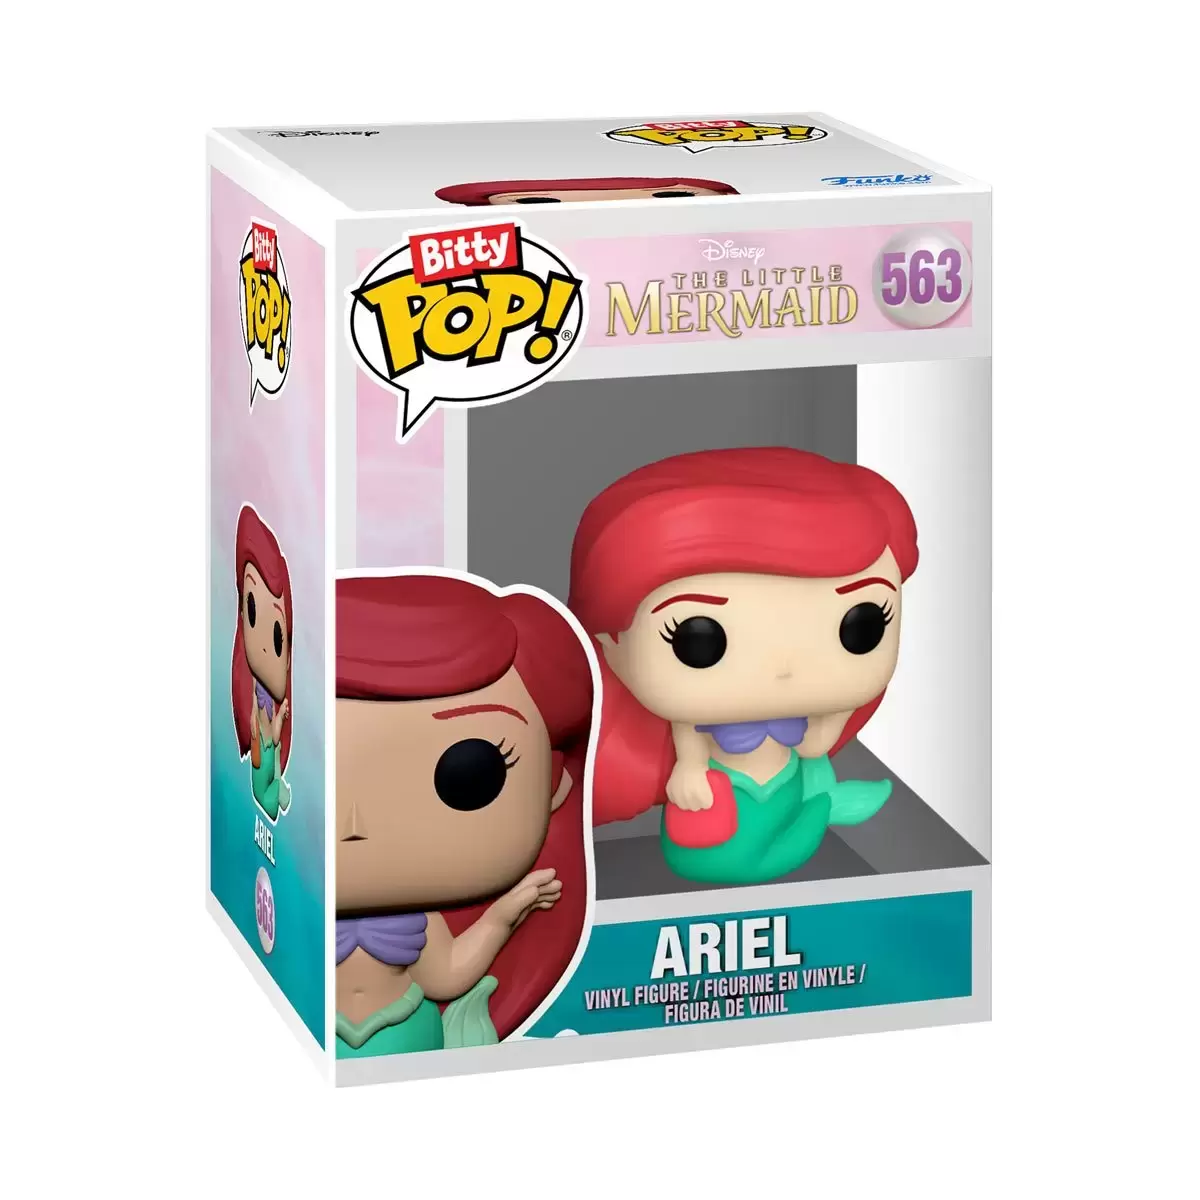 Bitty POP! - Disney Princess - Ariel